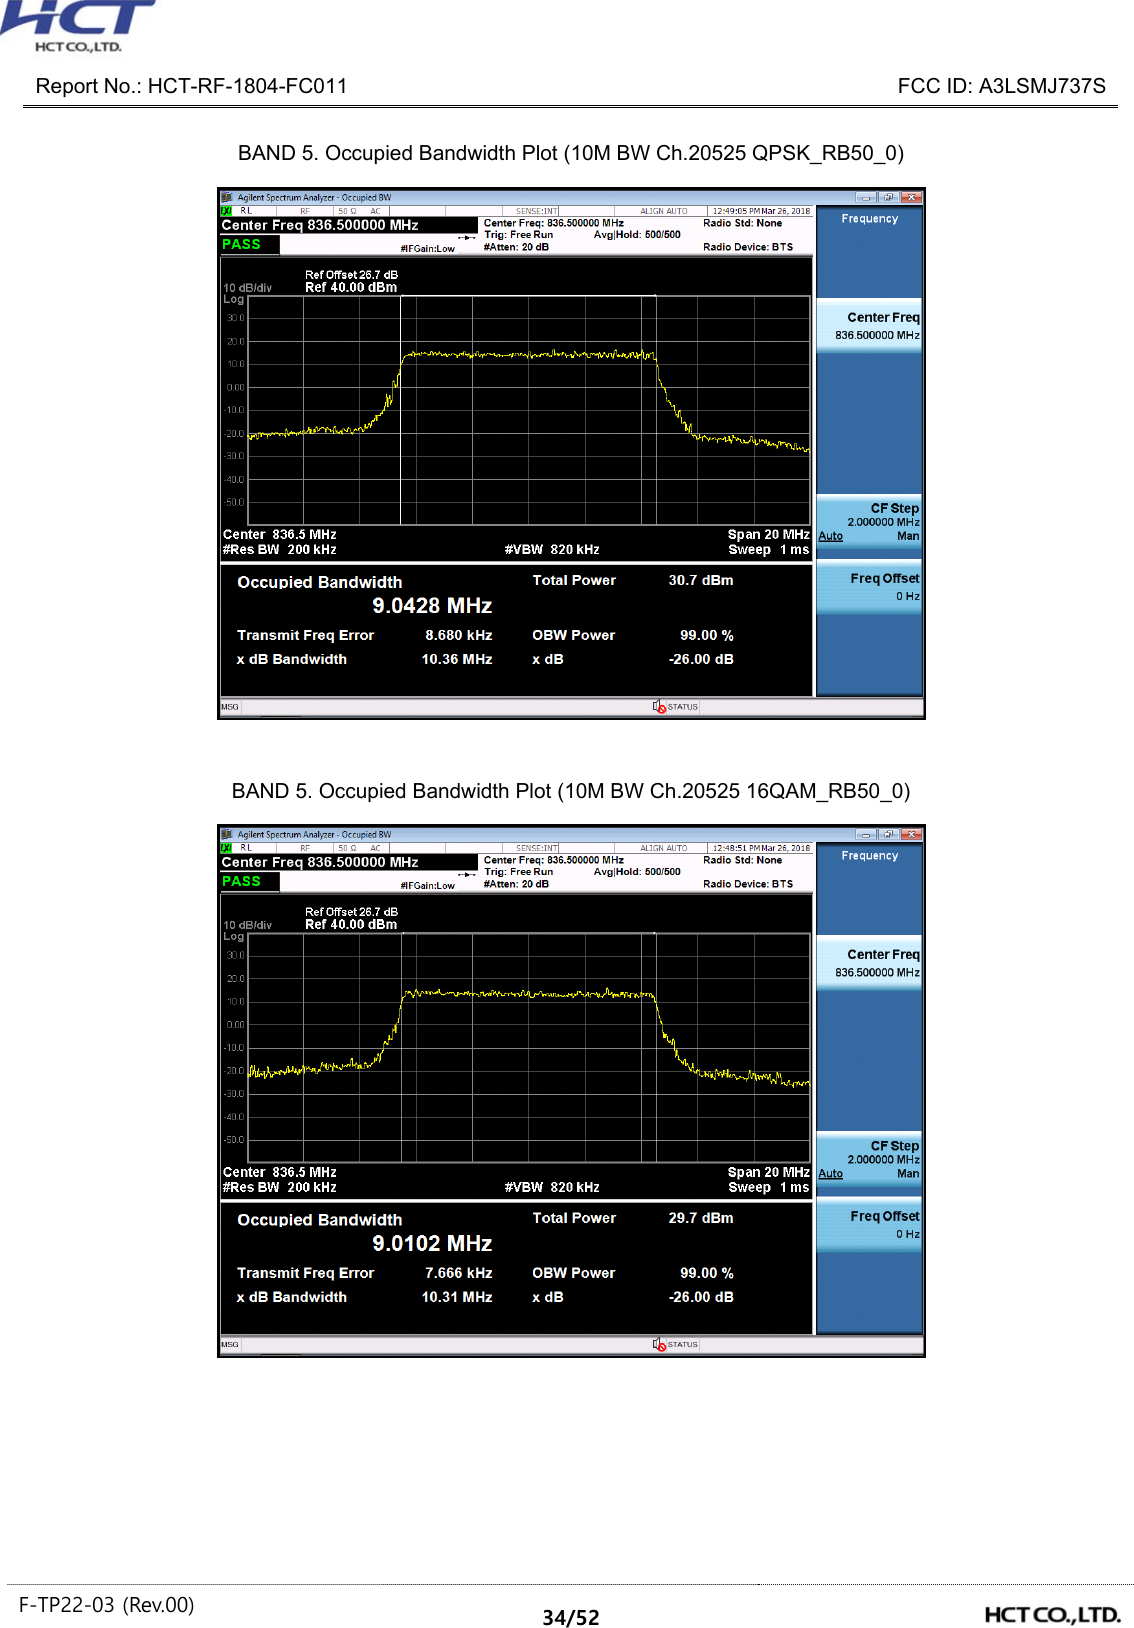  Report No.: HCT-RF-1804-FC011    FCC ID: A3LSMJ737S F-TP22-03 (Rev.00)  34/52  BAND 5. Occupied Bandwidth Plot (10M BW Ch.20525 QPSK_RB50_0)   BAND 5. Occupied Bandwidth Plot (10M BW Ch.20525 16QAM_RB50_0)    